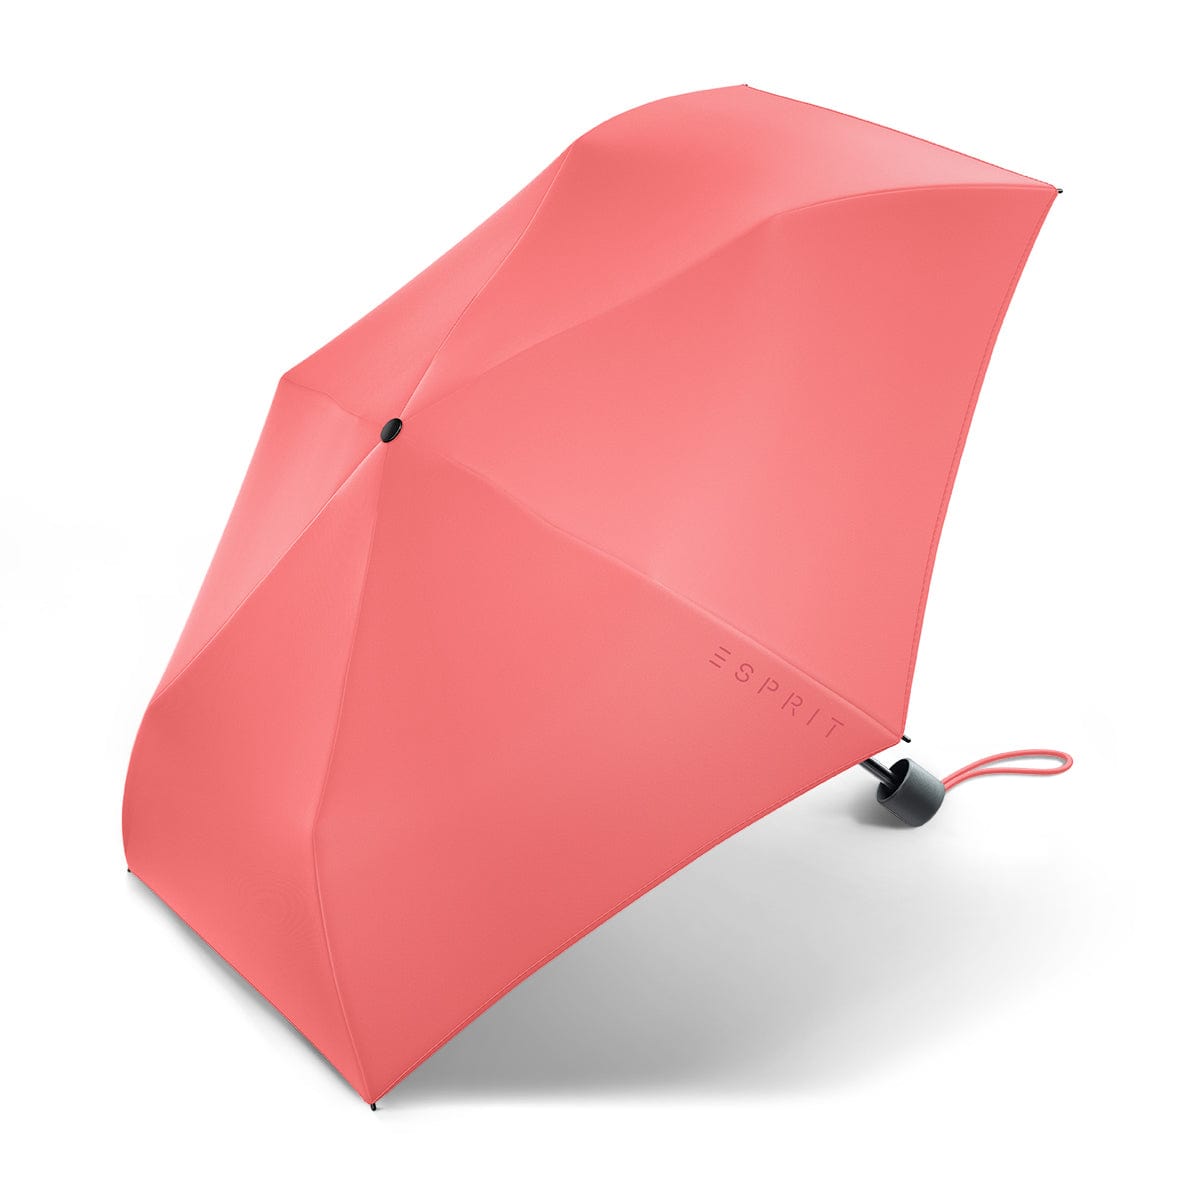 TechRise Windproof Compact Umbrella, Automatic Folding Umbrellas with